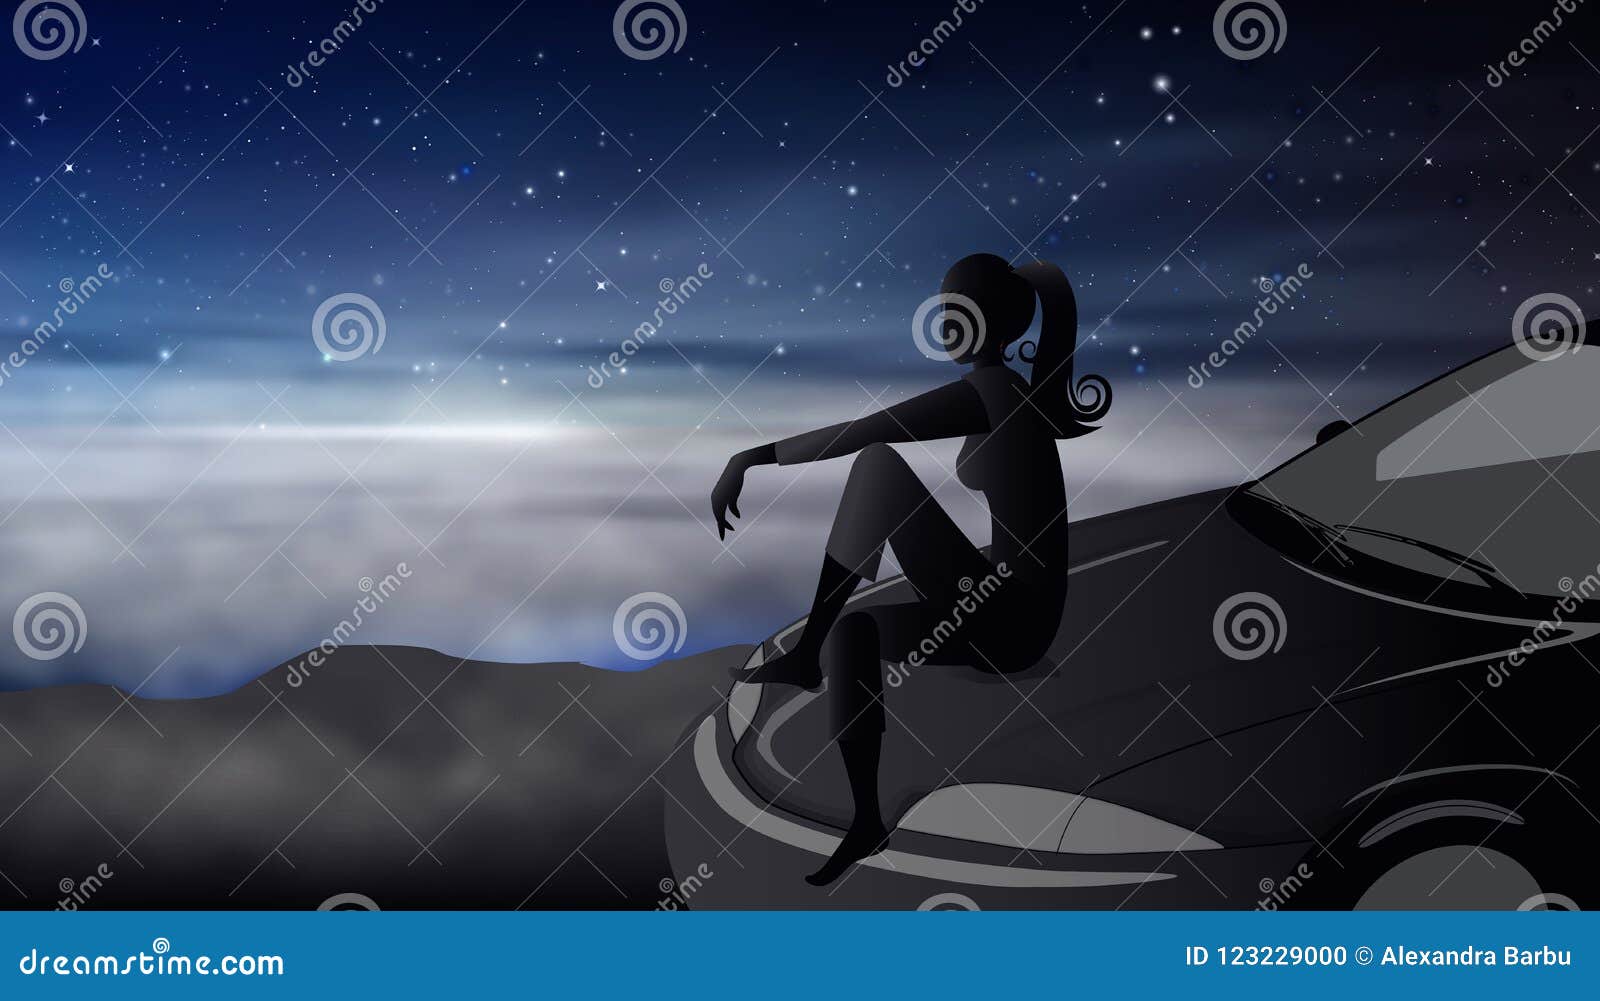 https://thumbs.dreamstime.com/z/night-sky-stars-girl-silhouette-car-hood-dreaming-dark-blue-night-sky-stars-galaxy-panorama-view-girl-silhouette-123229000.jpg